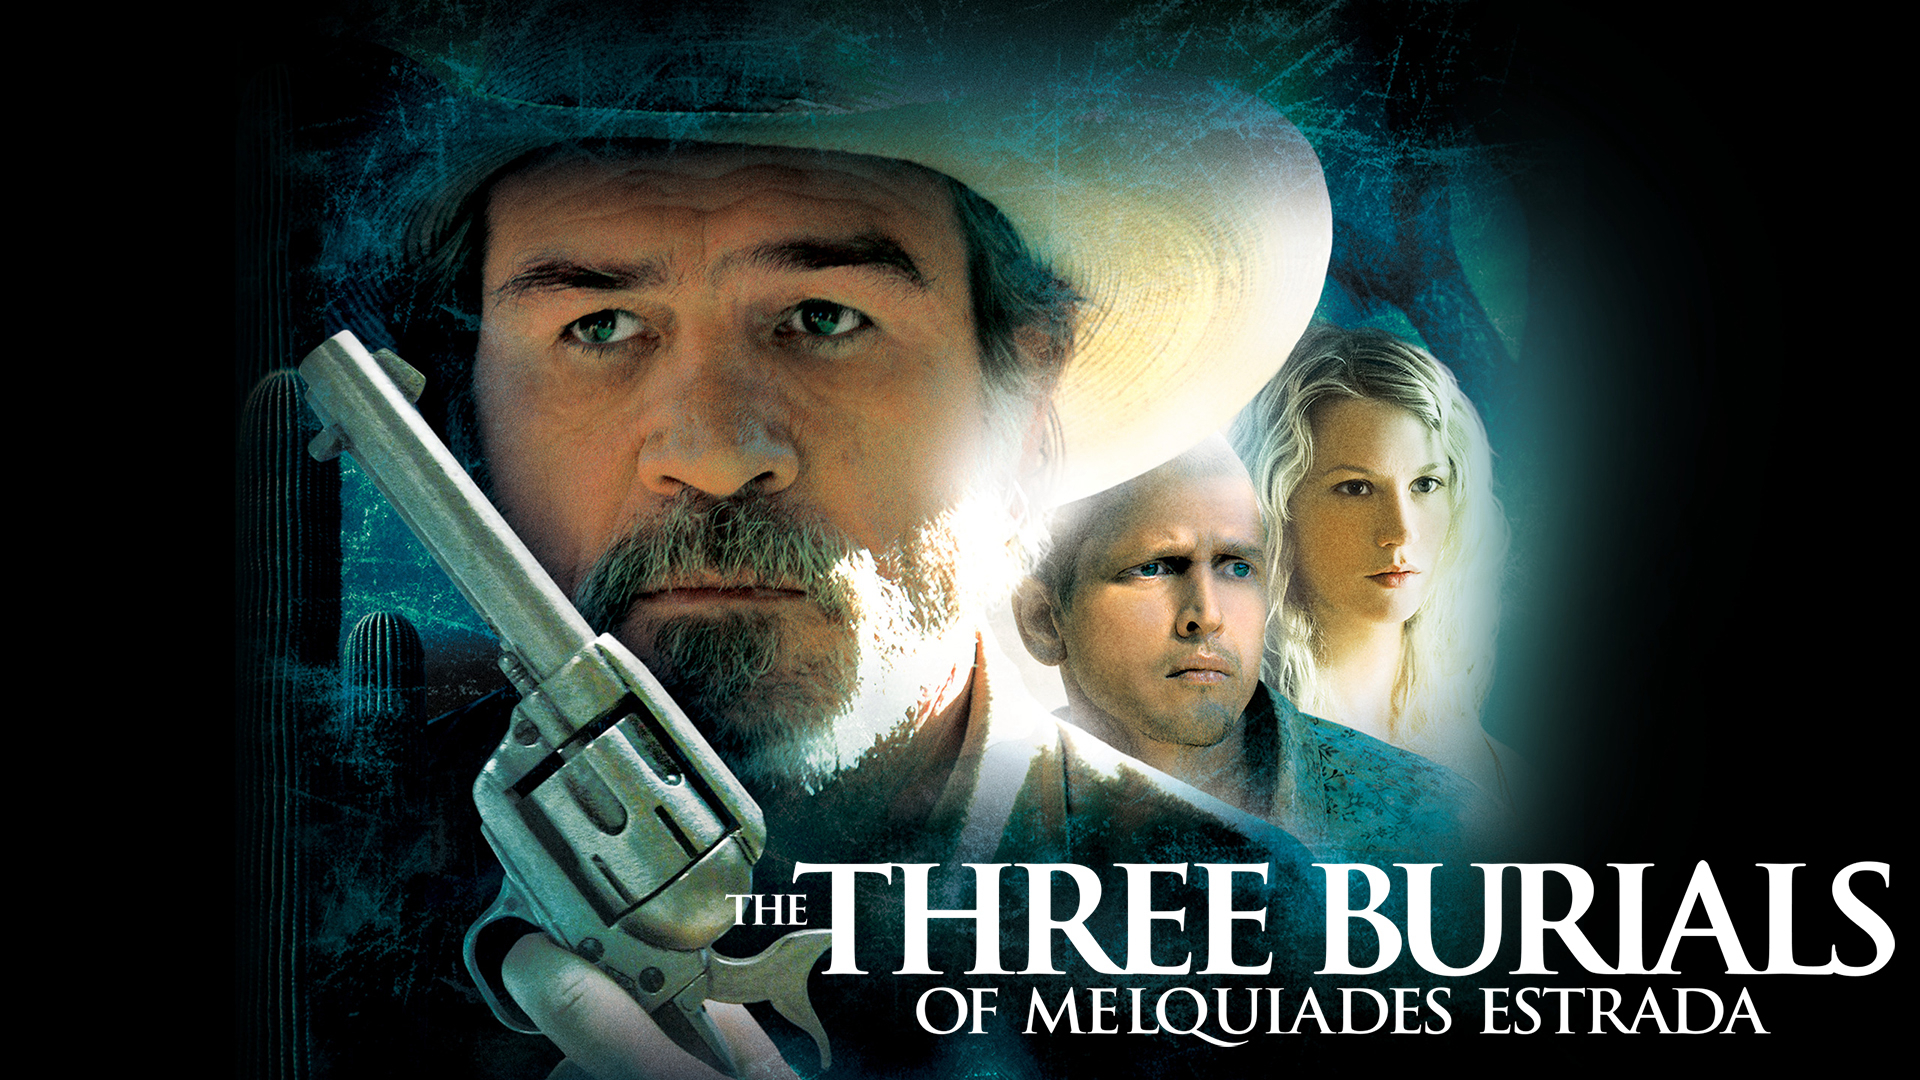 The Three Burials of Melquiades Estrada / The Three Burials of Melquiades Estrada (2005)